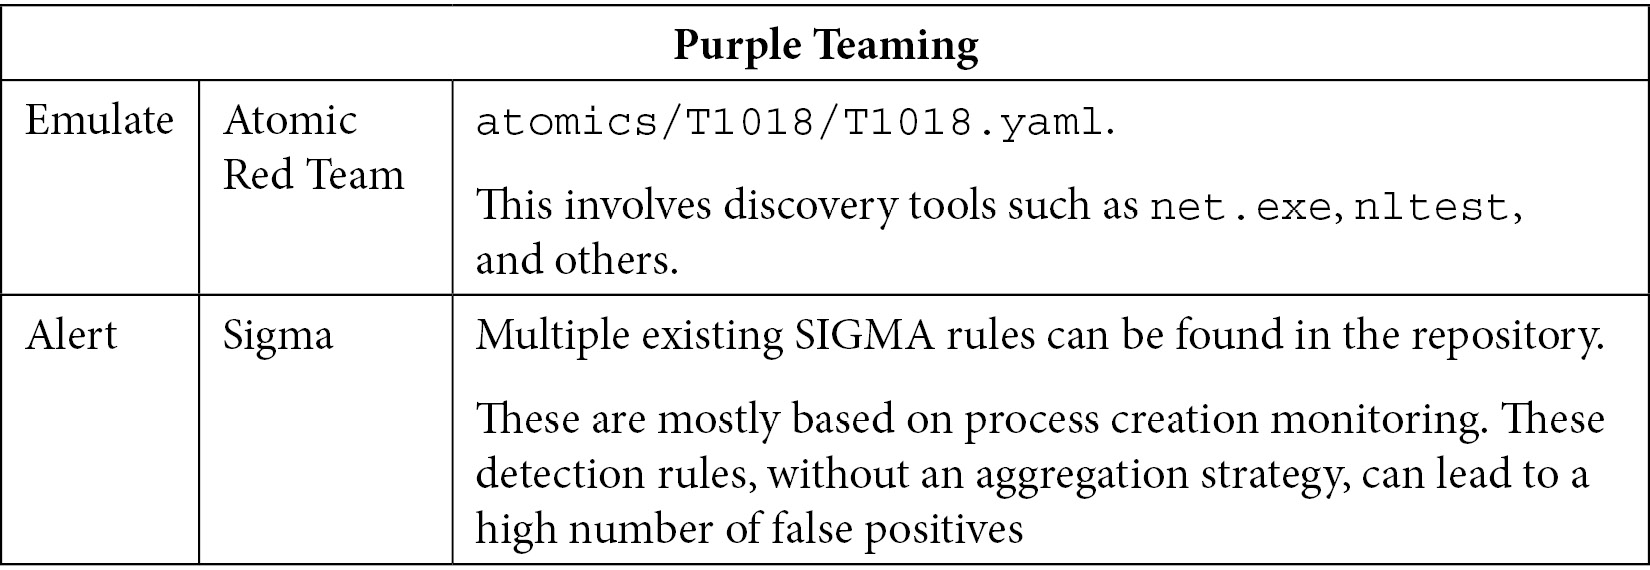 Table 10.14 – Purple Teaming T1018
